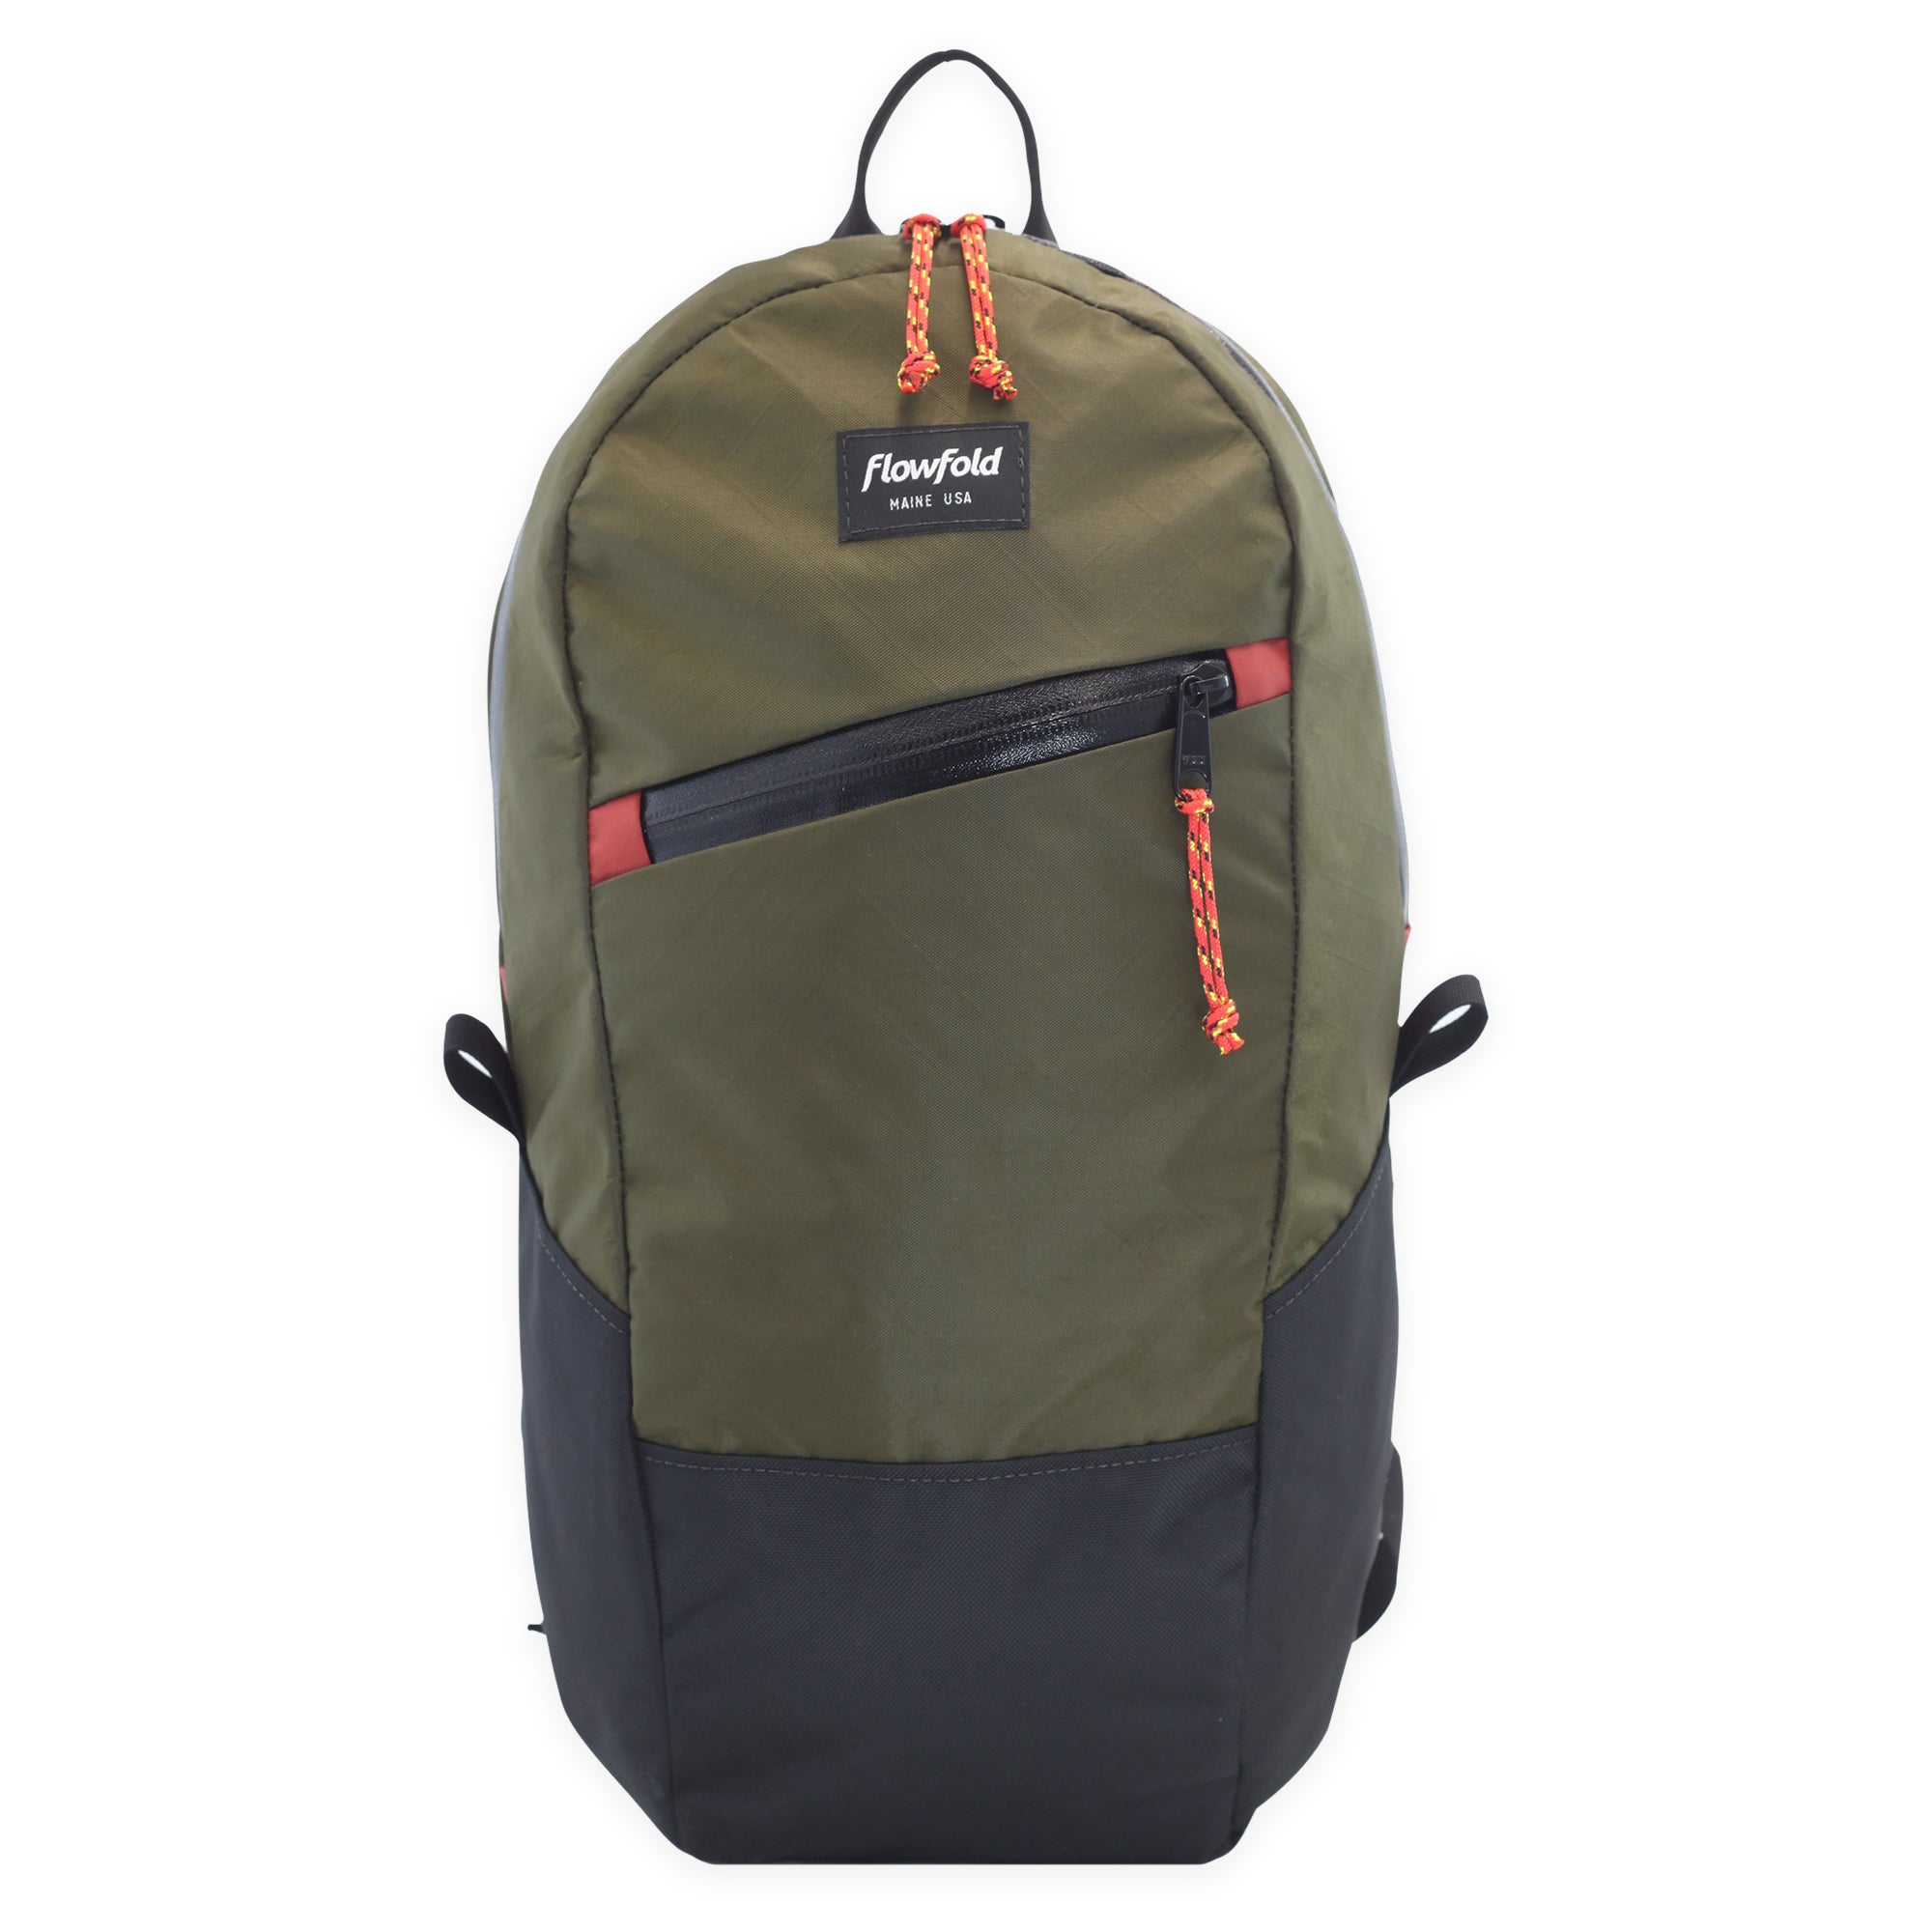 Flowfold Optimist 10L Mini Backpack Front Zipper Pocket View of Olive Green with Brick Red Zipper Pulls